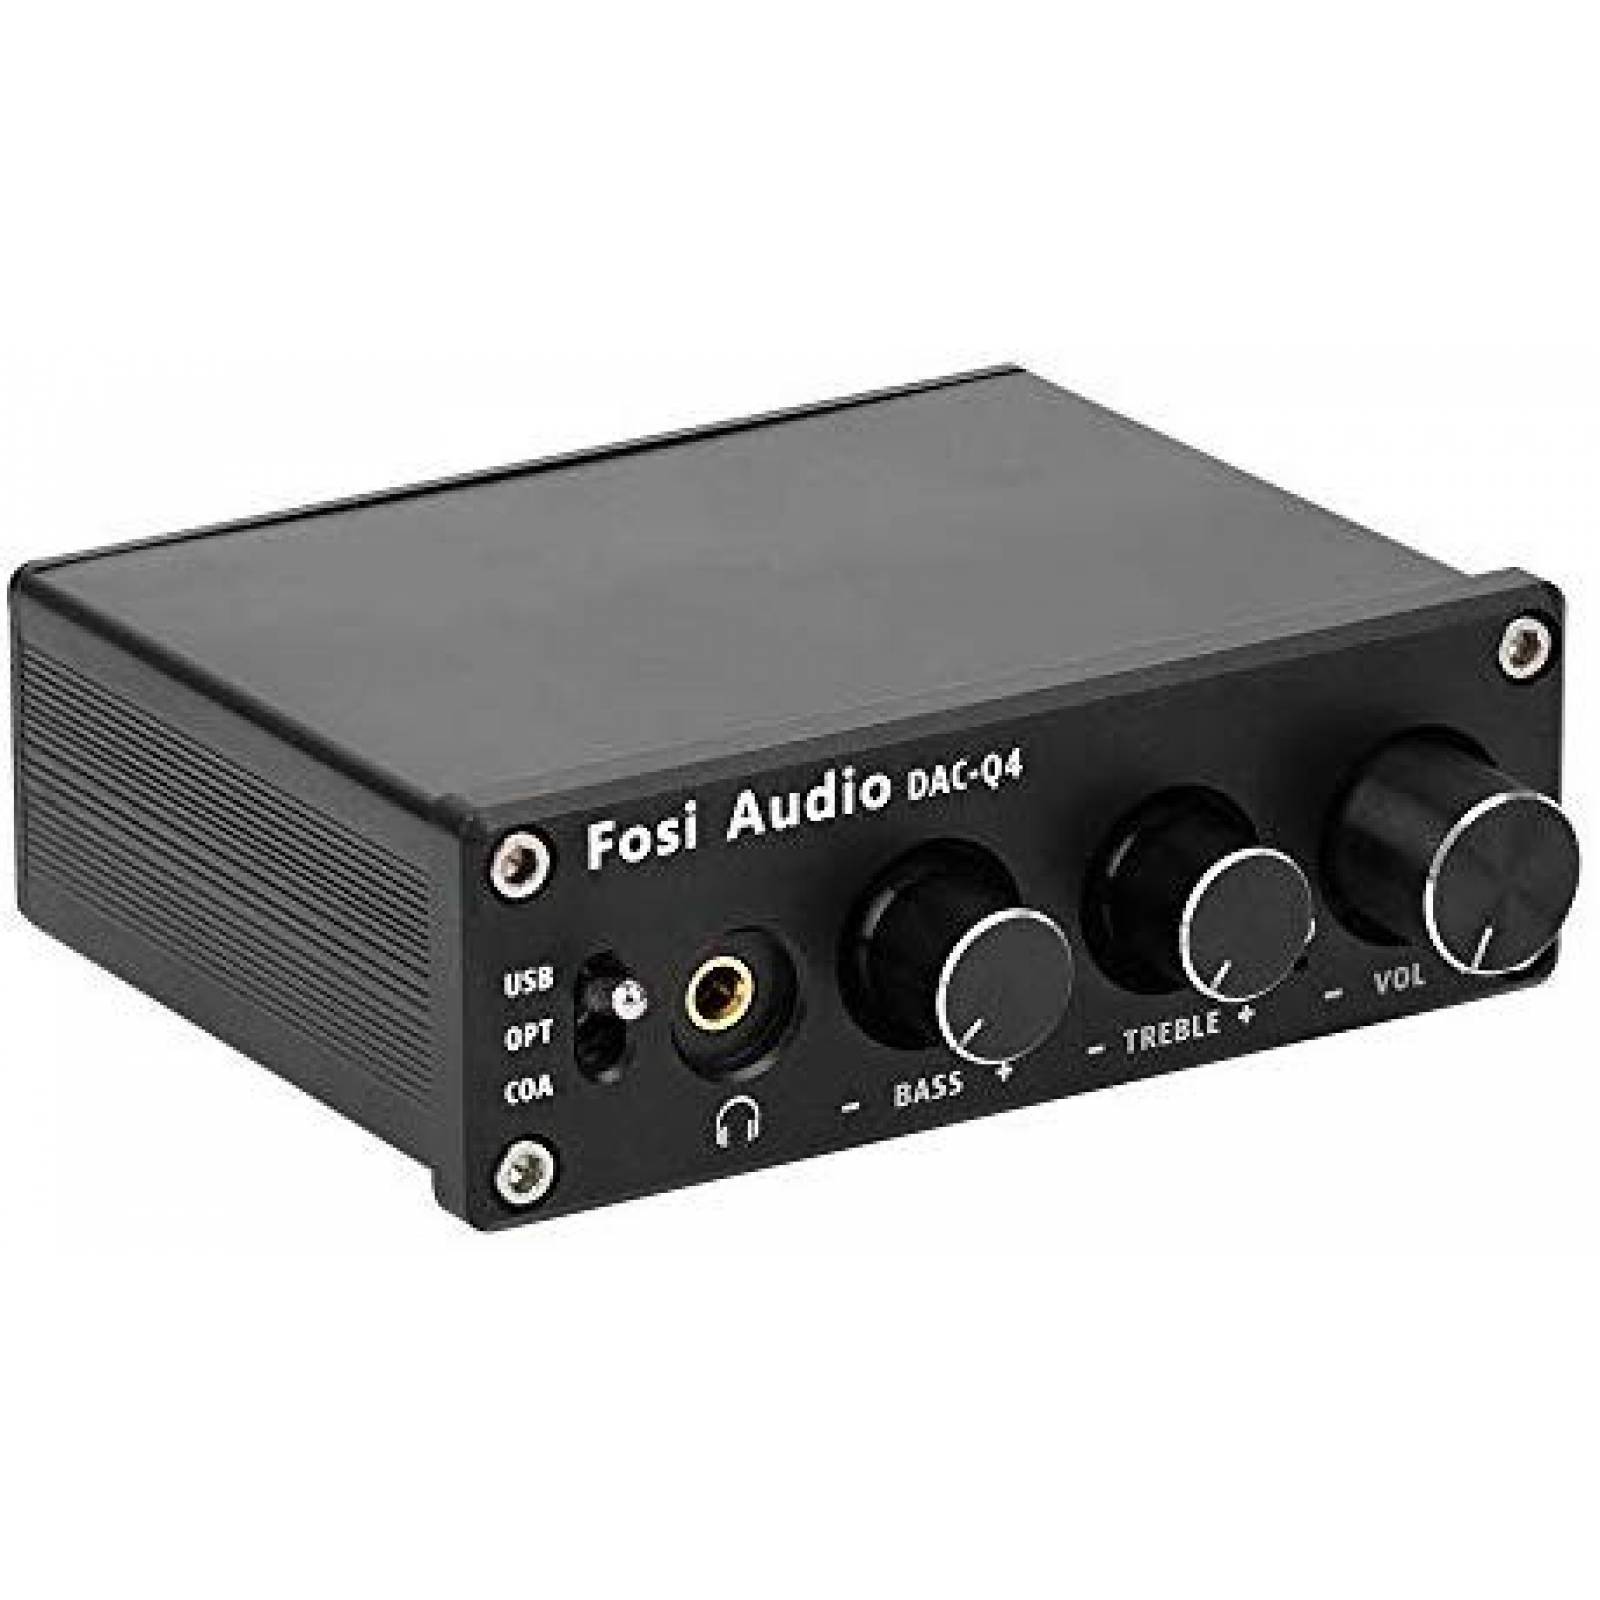 Convertidor de audio Fosi Audio DAC 24-bit/192kHz -Negro